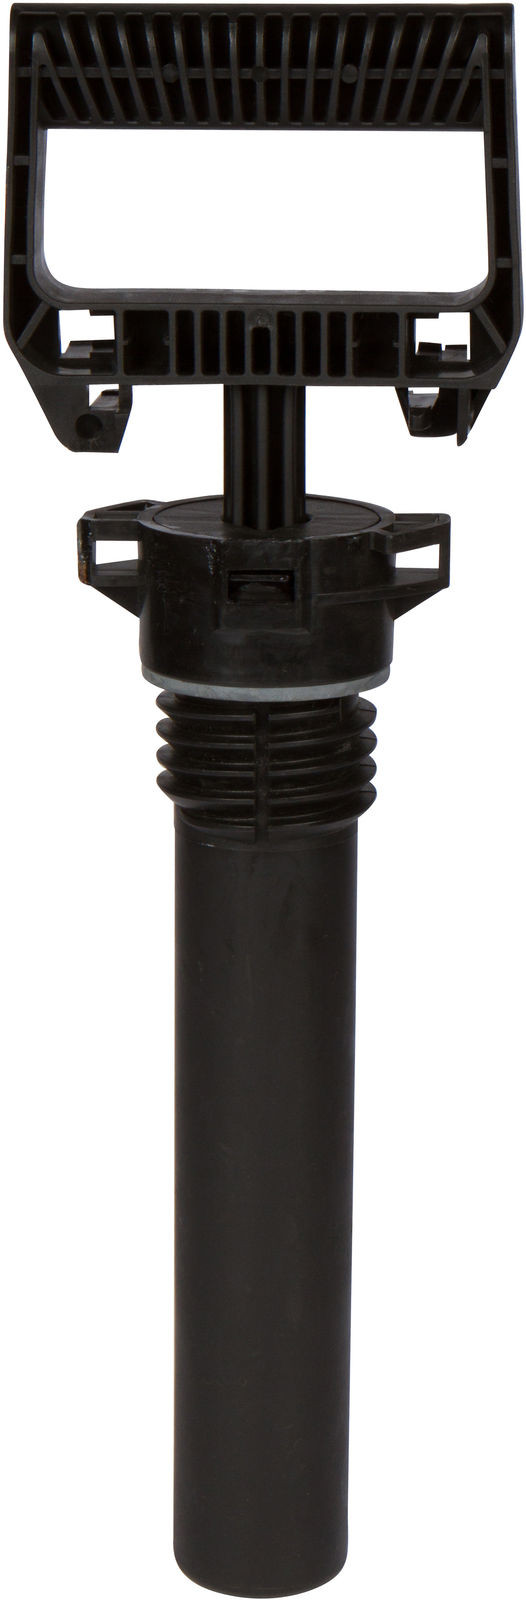 180305 Pump Assy, Black, Complete, ML